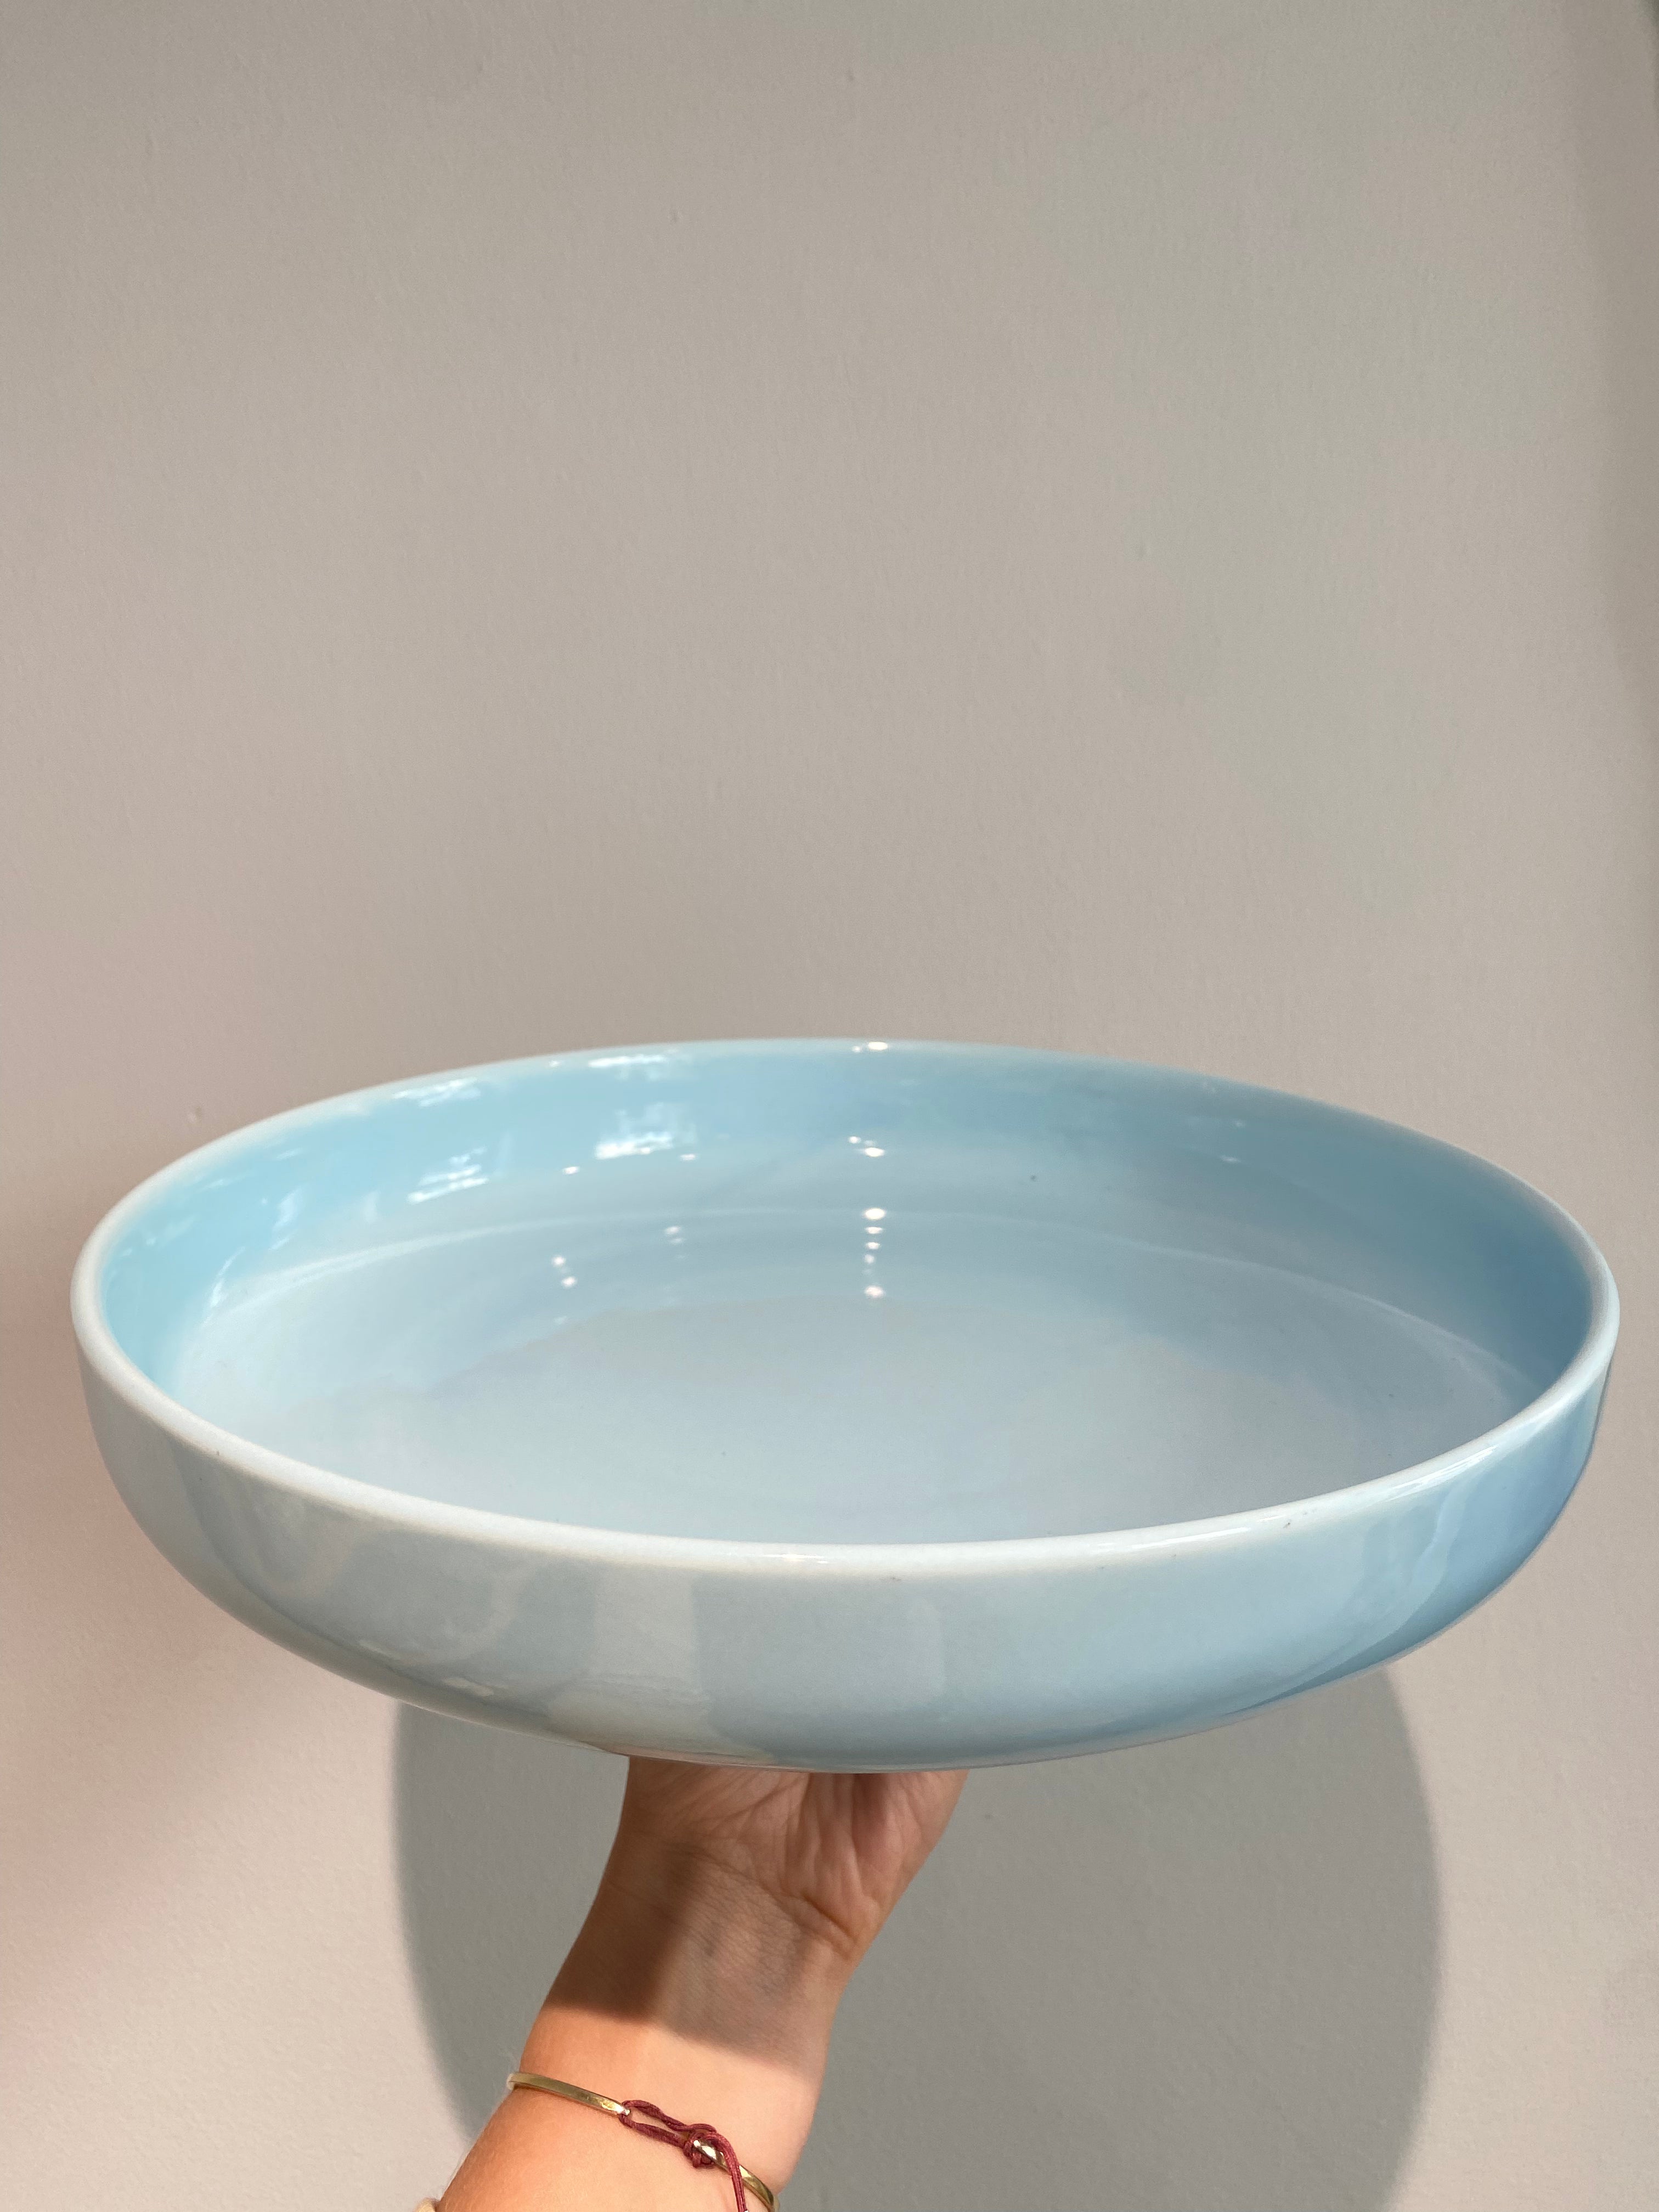 Large dish with light blue glaze